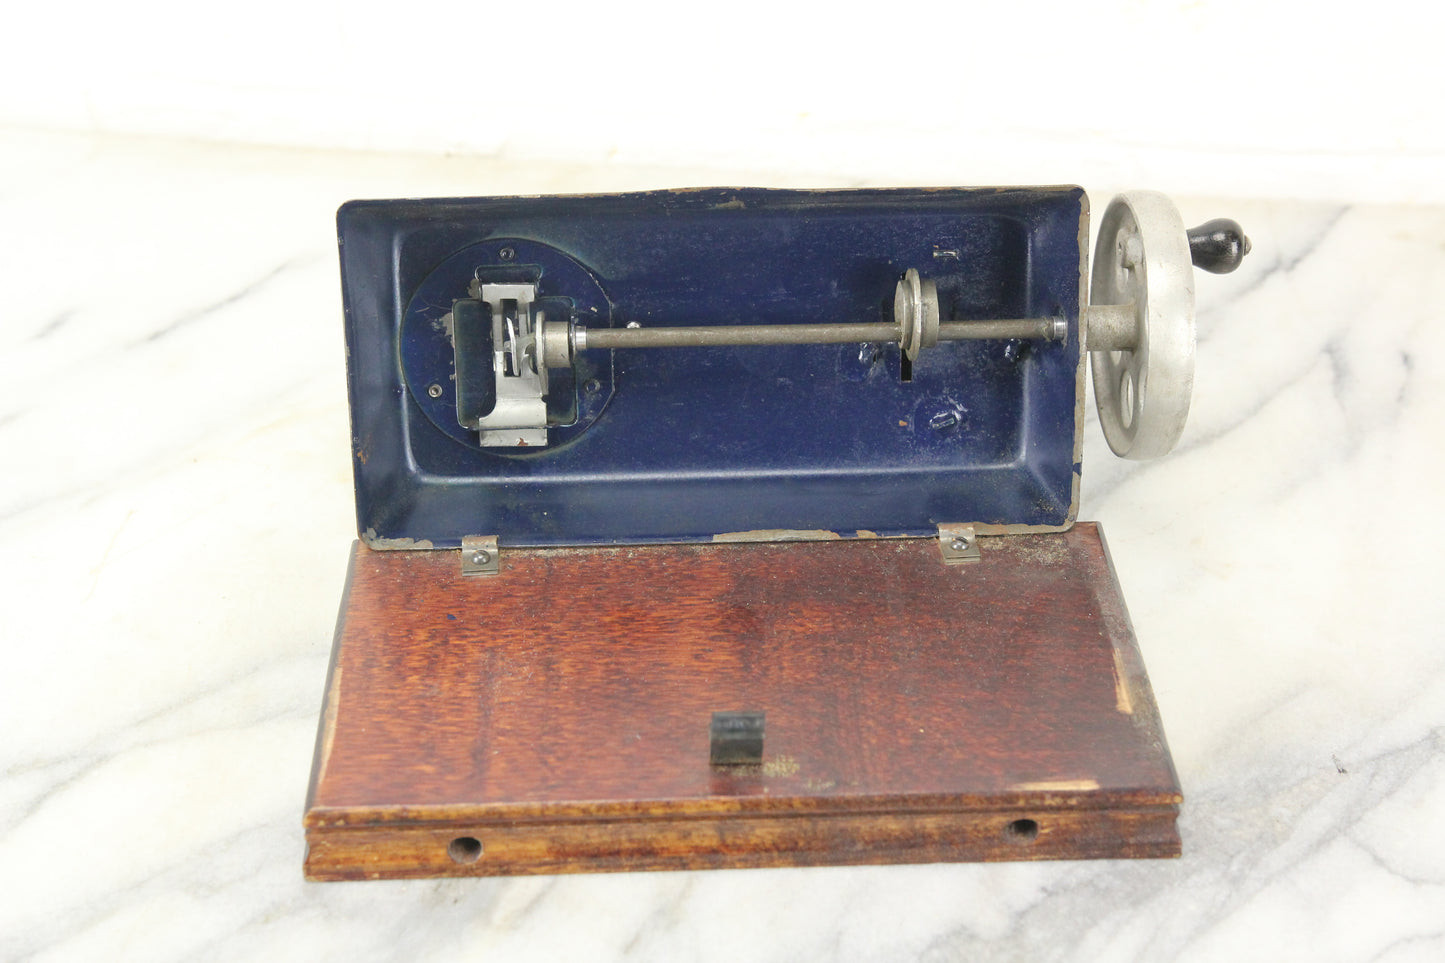 Artcraft Metal Products Junior Miss 1940s Handcrank Toy Sewing Machine